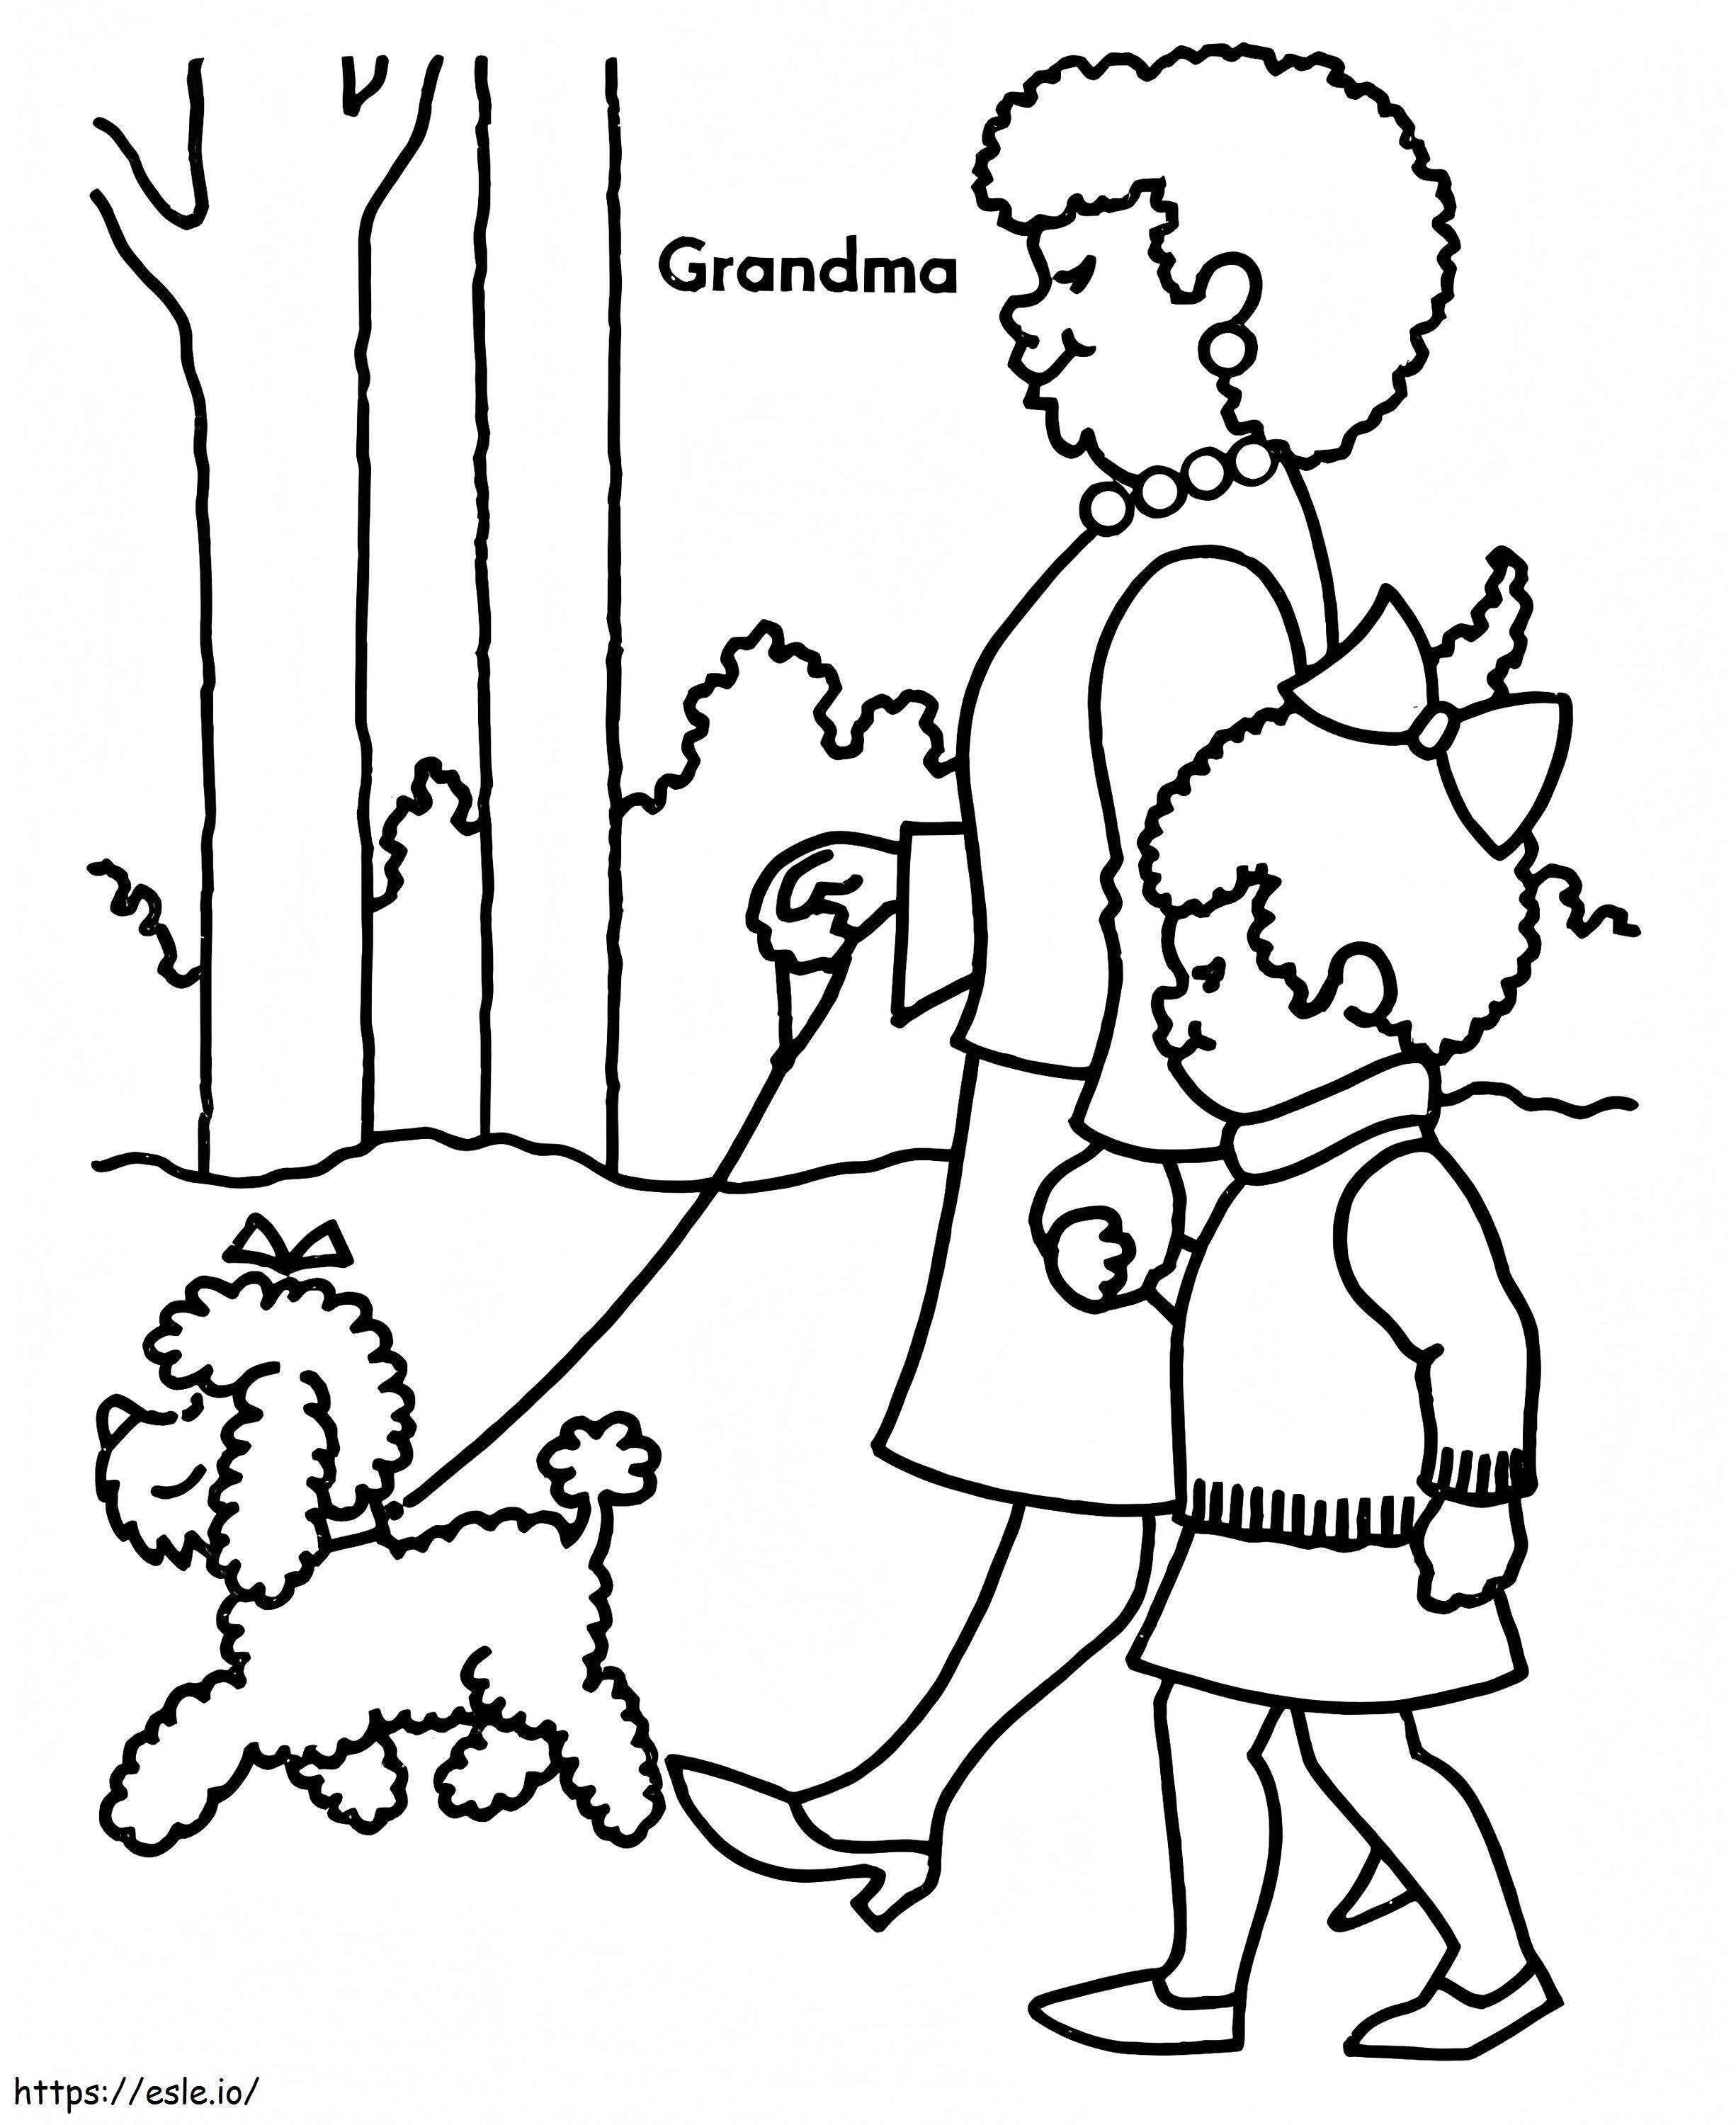 Grandma And Me coloring page